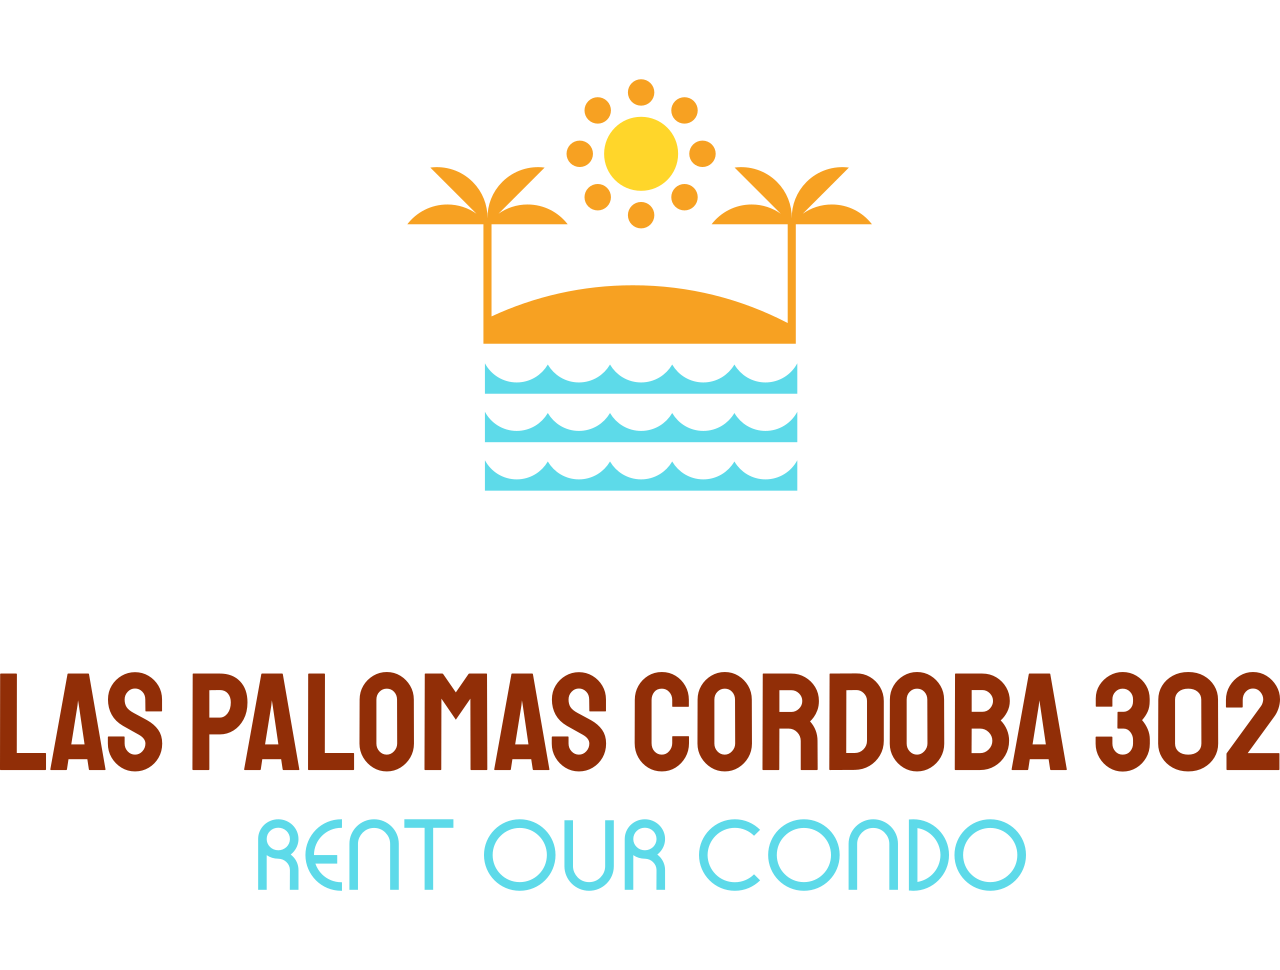 Las Palomas Cordoba 302's web page